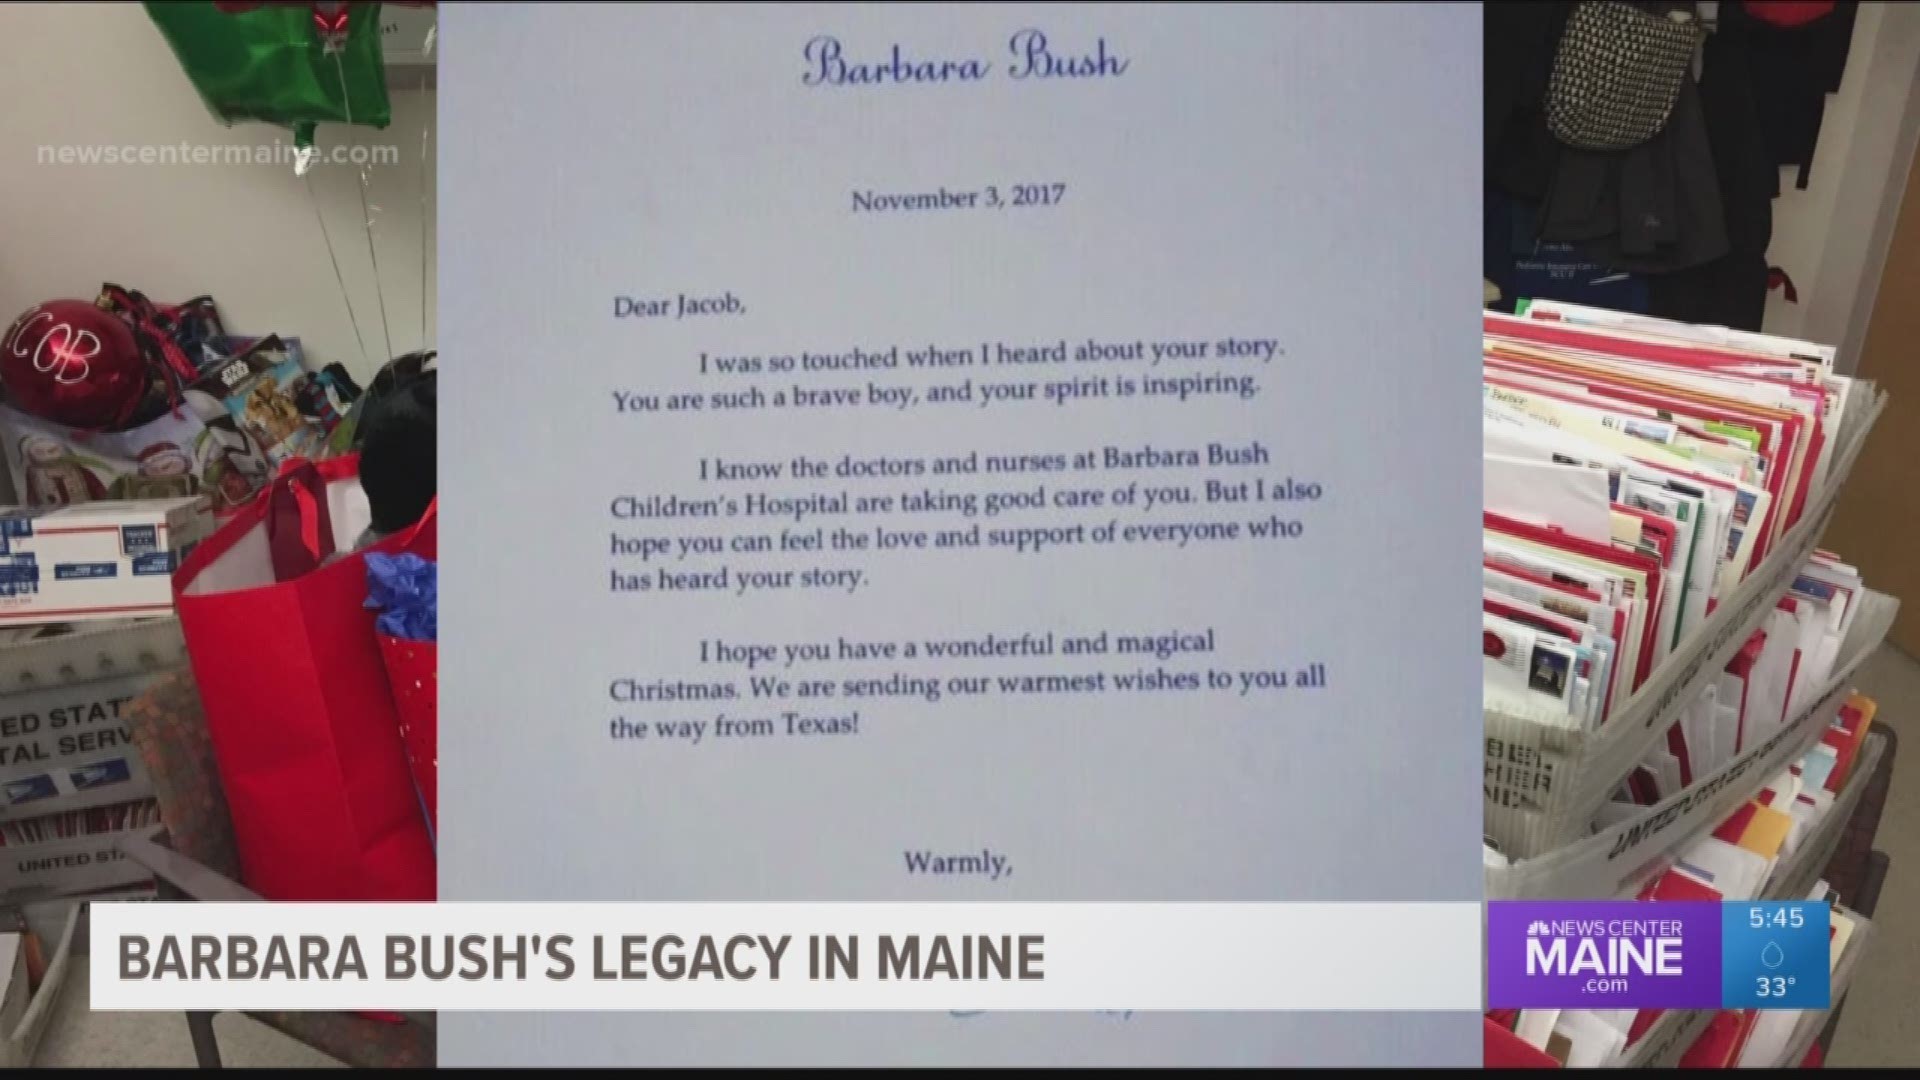 One family's special bond with Barbara Bush